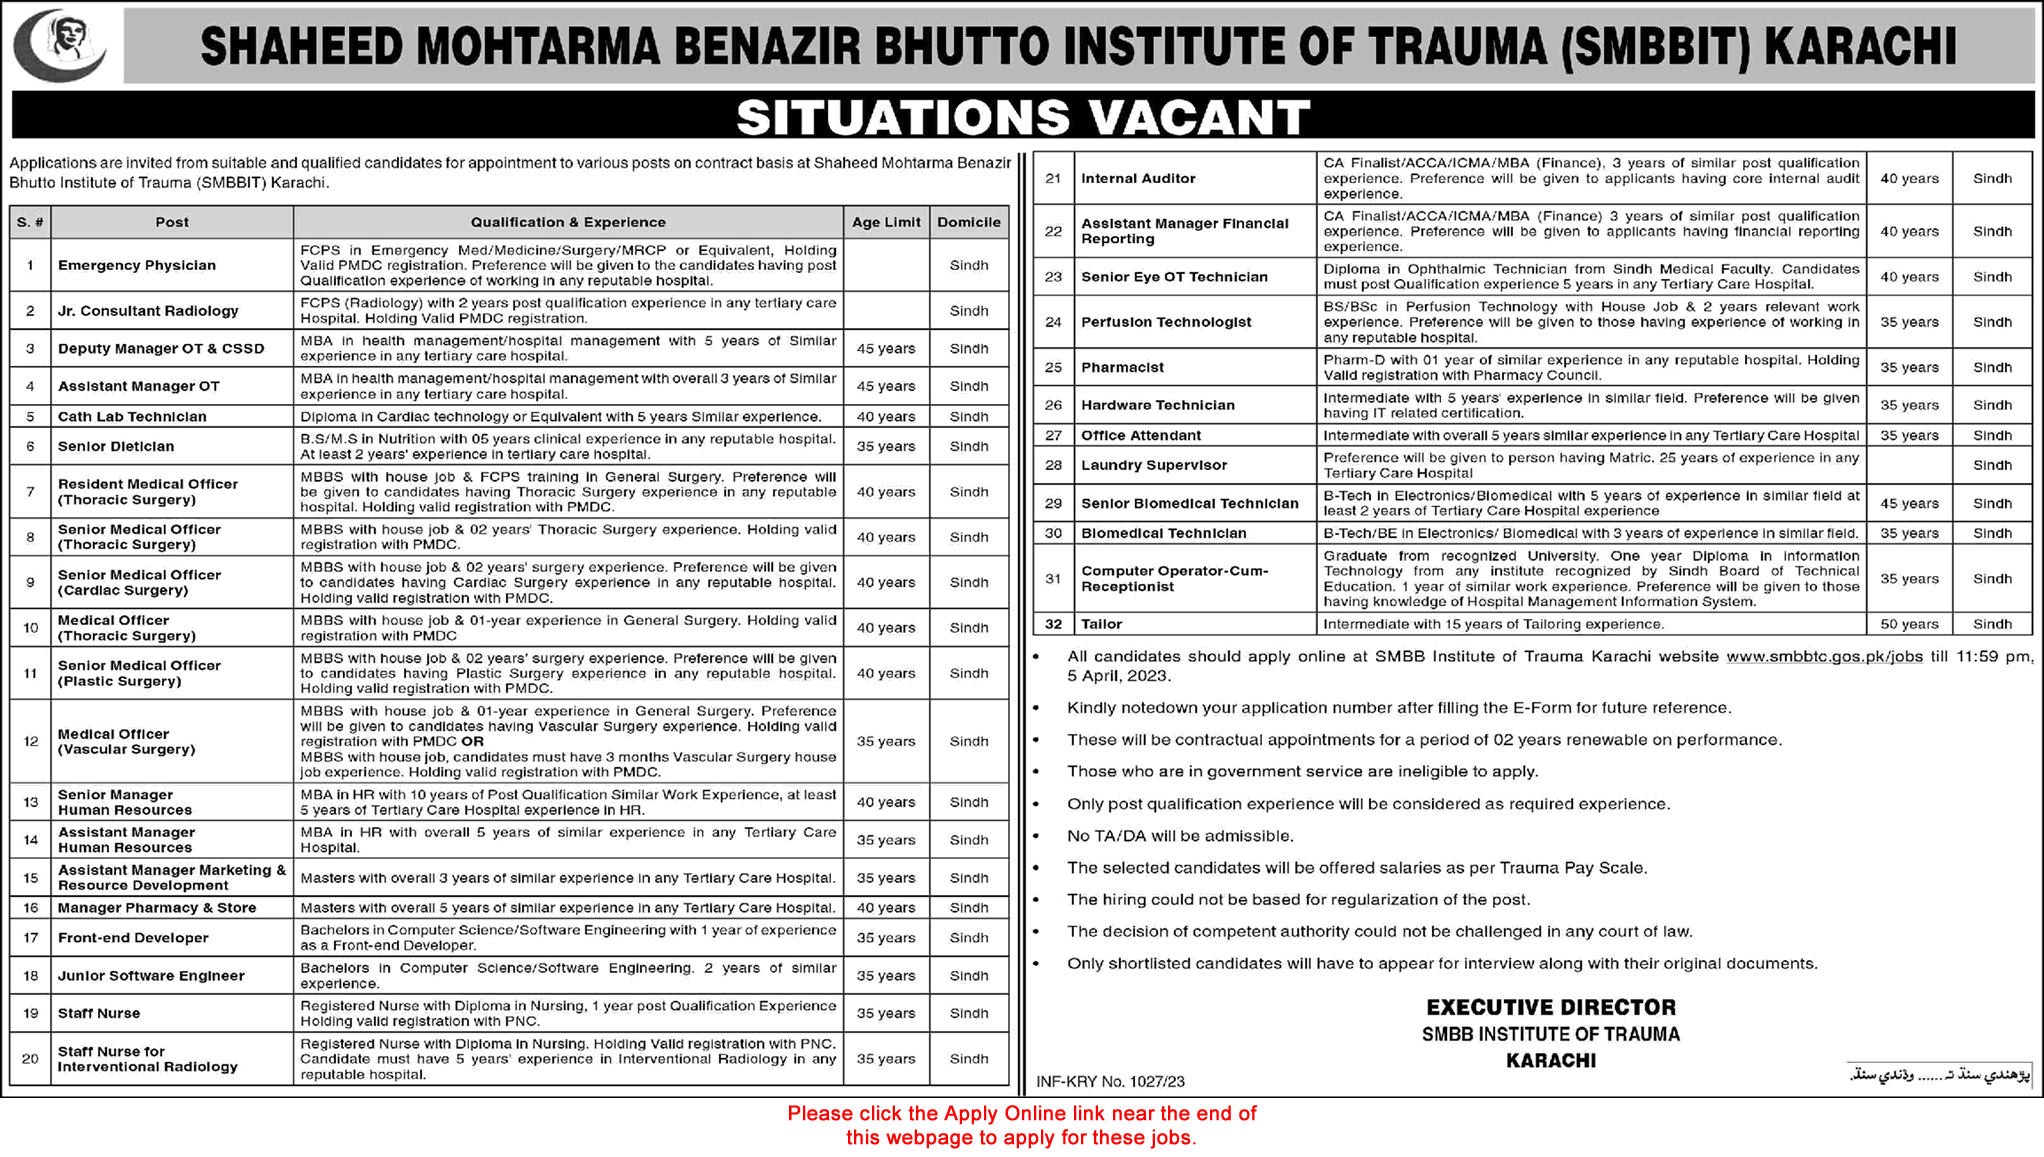 Shaheed Mohtarma Benazir Bhutto Institute of Trauma Karachi Jobs March 2023 SMBBIT Apply Online Latest